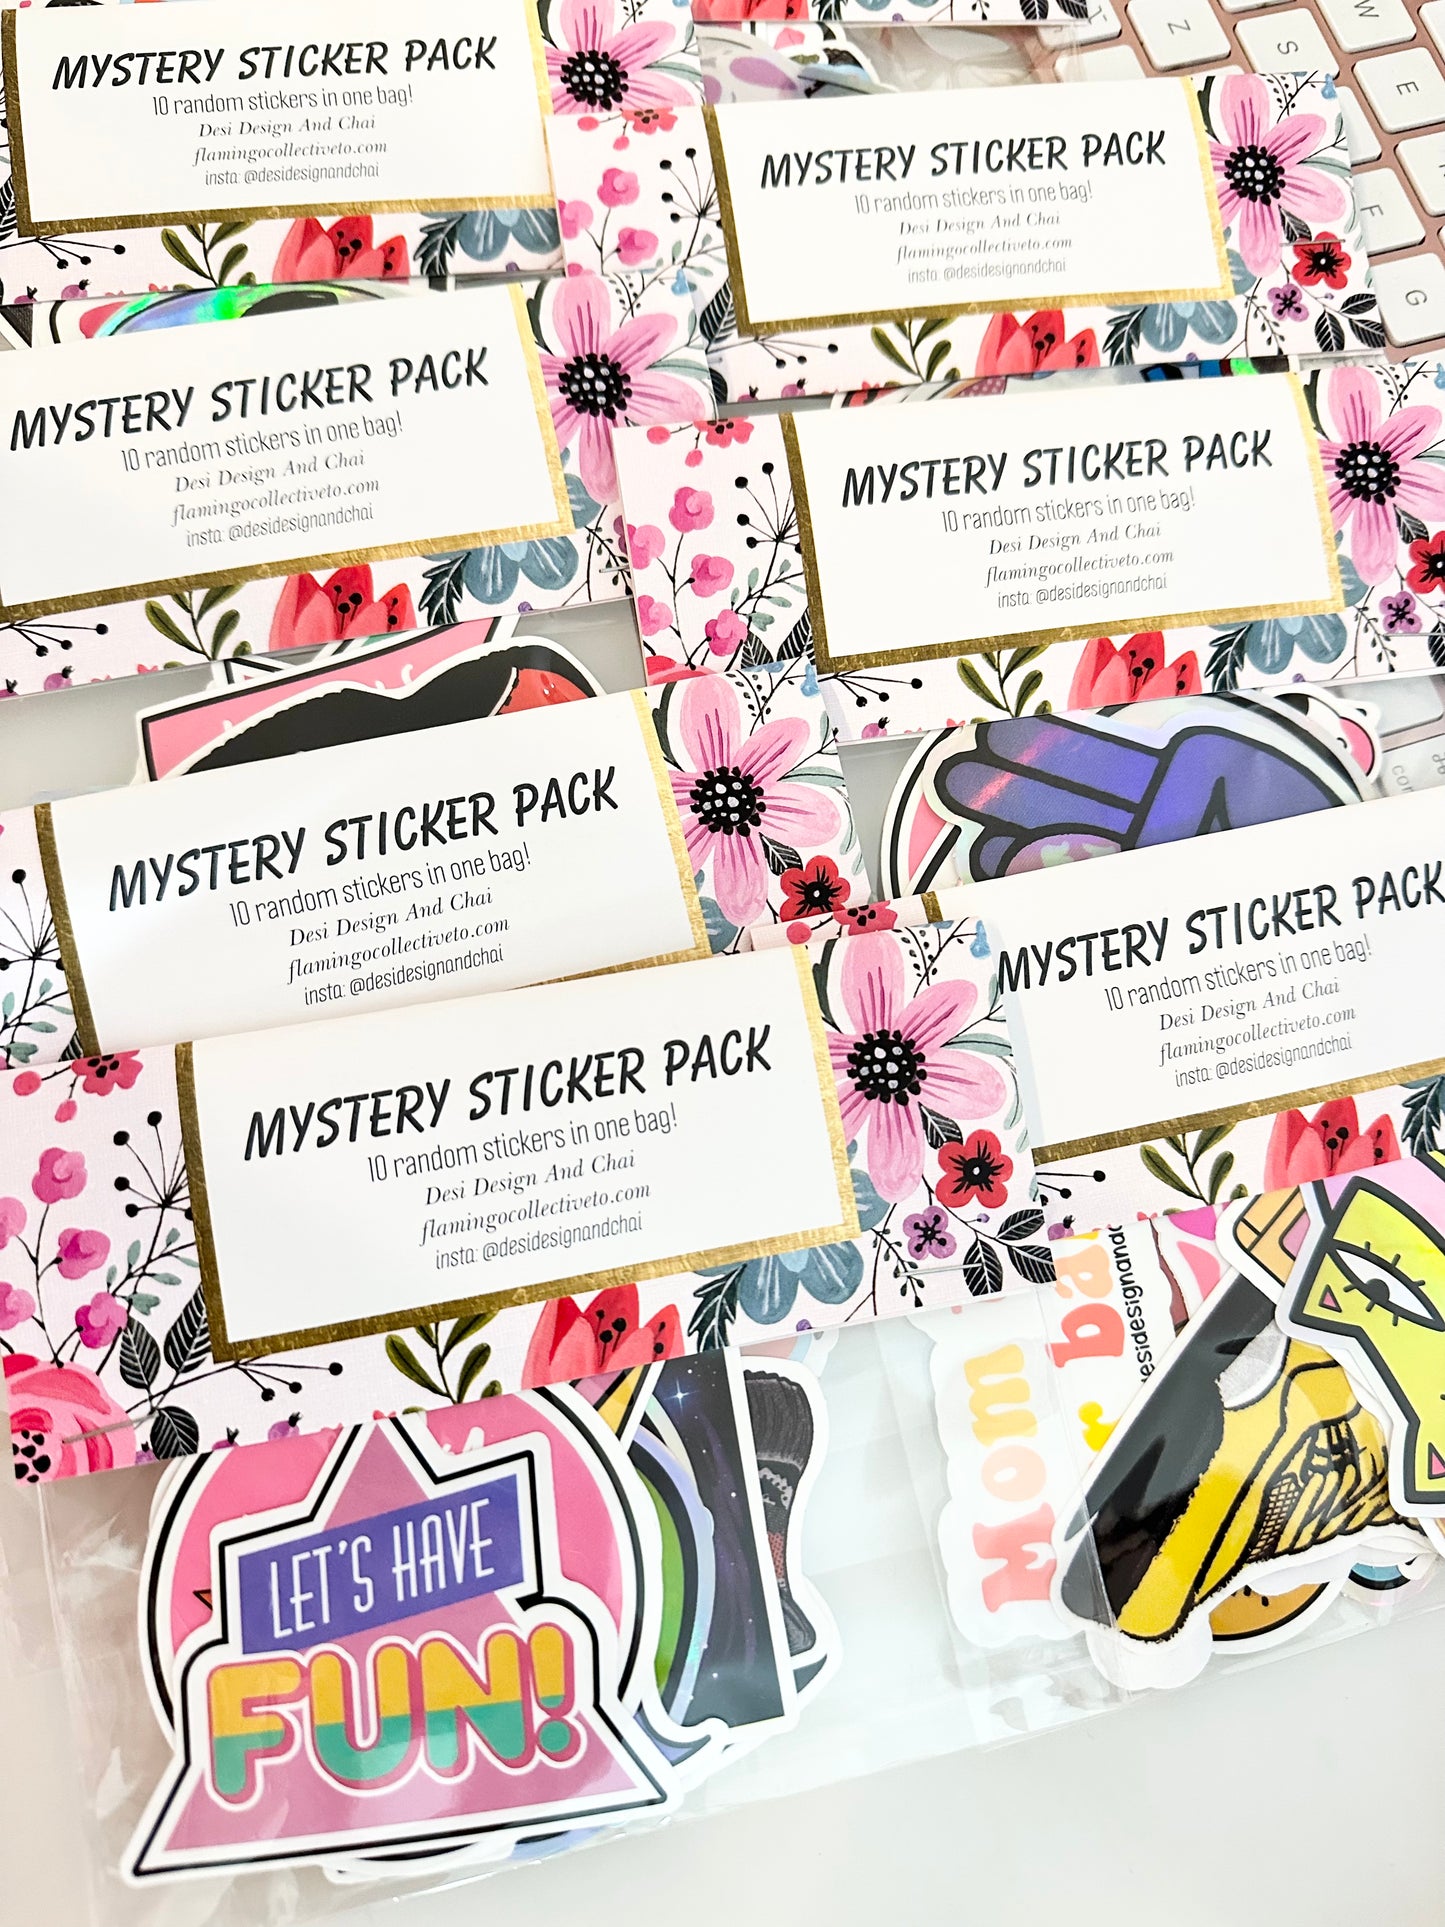 Mystery sticker pack